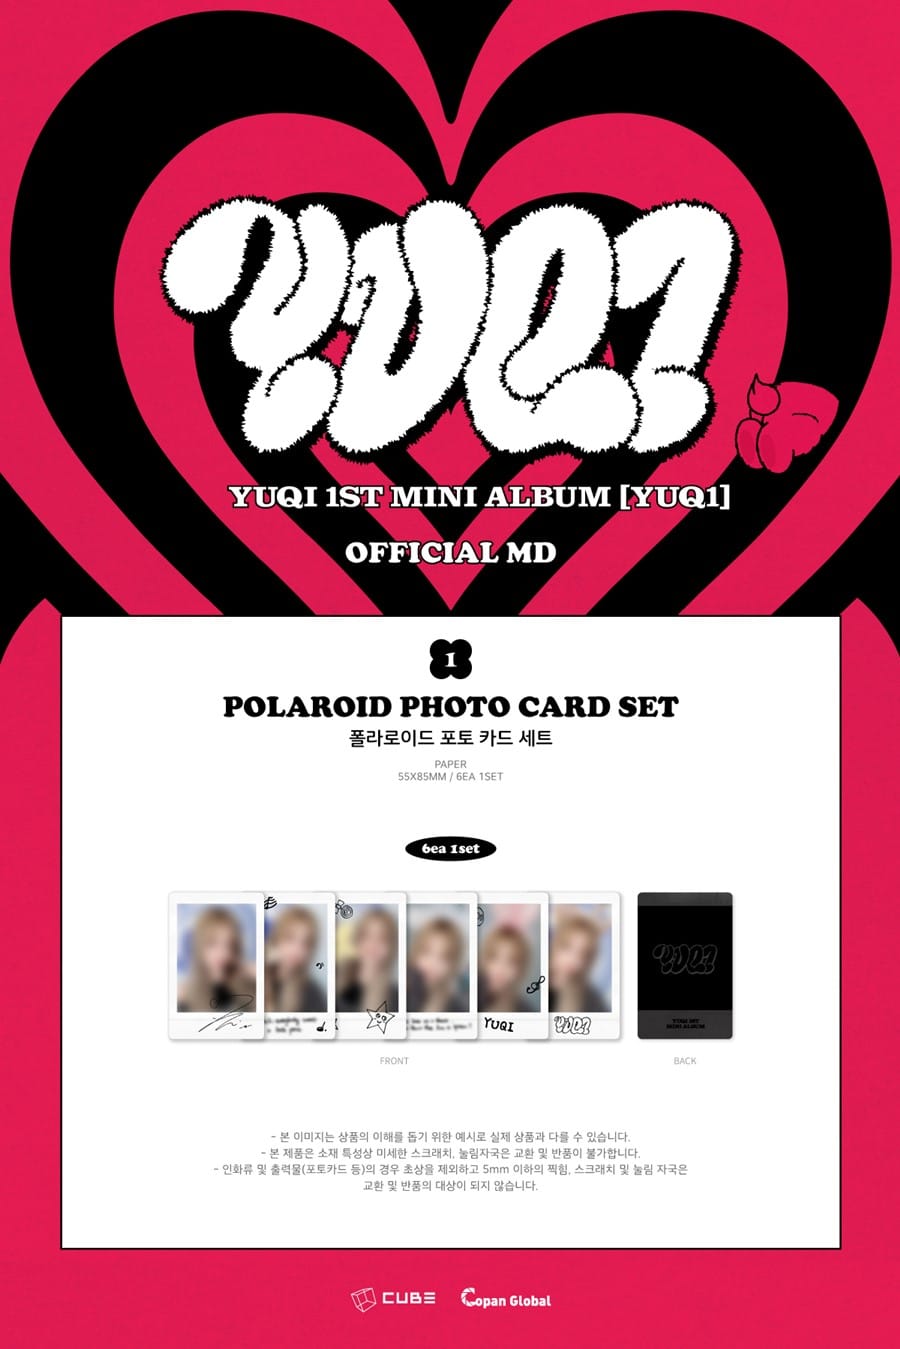 yuqi-g-i-dle-1st-mini-album-yuq1-md-01-polaroid-photo-card-set-wholesales